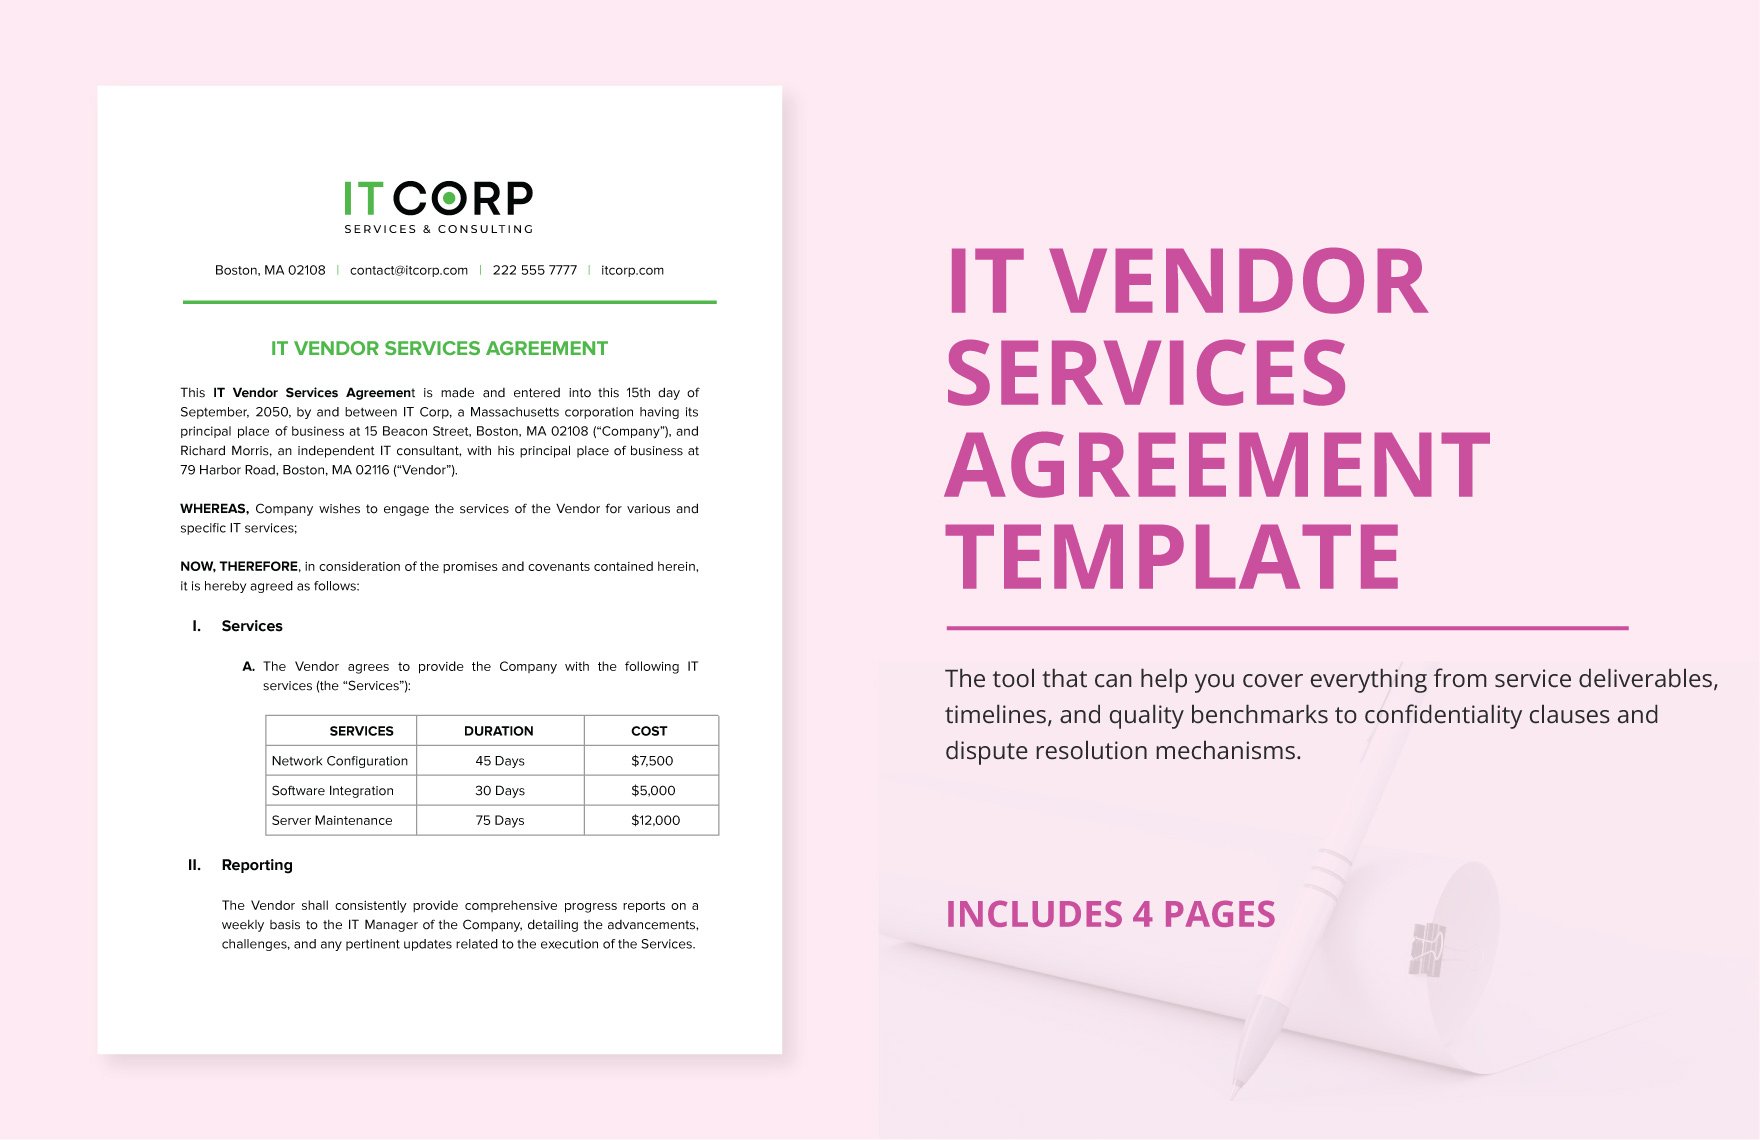 IT Vendor Services Agreement Template